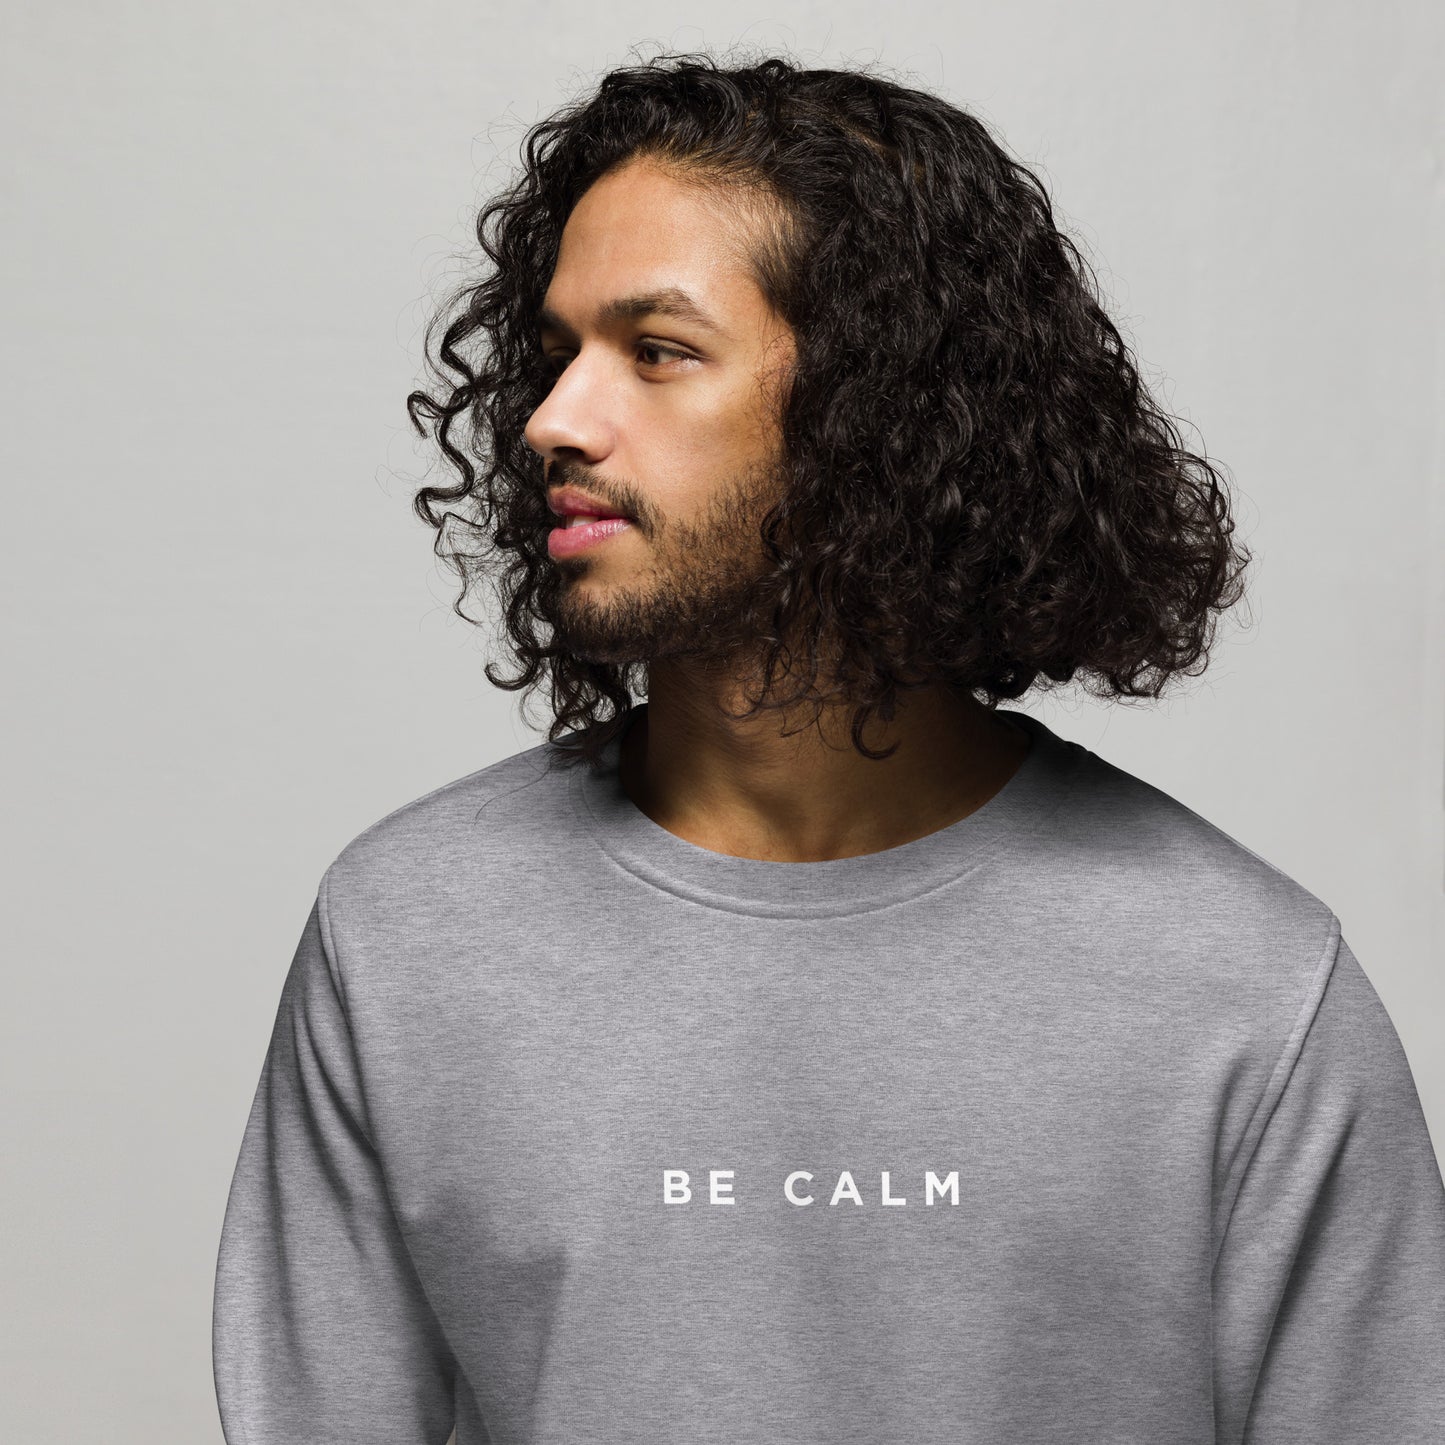 Be Calm Men's Organic Cotton Sweatshirt